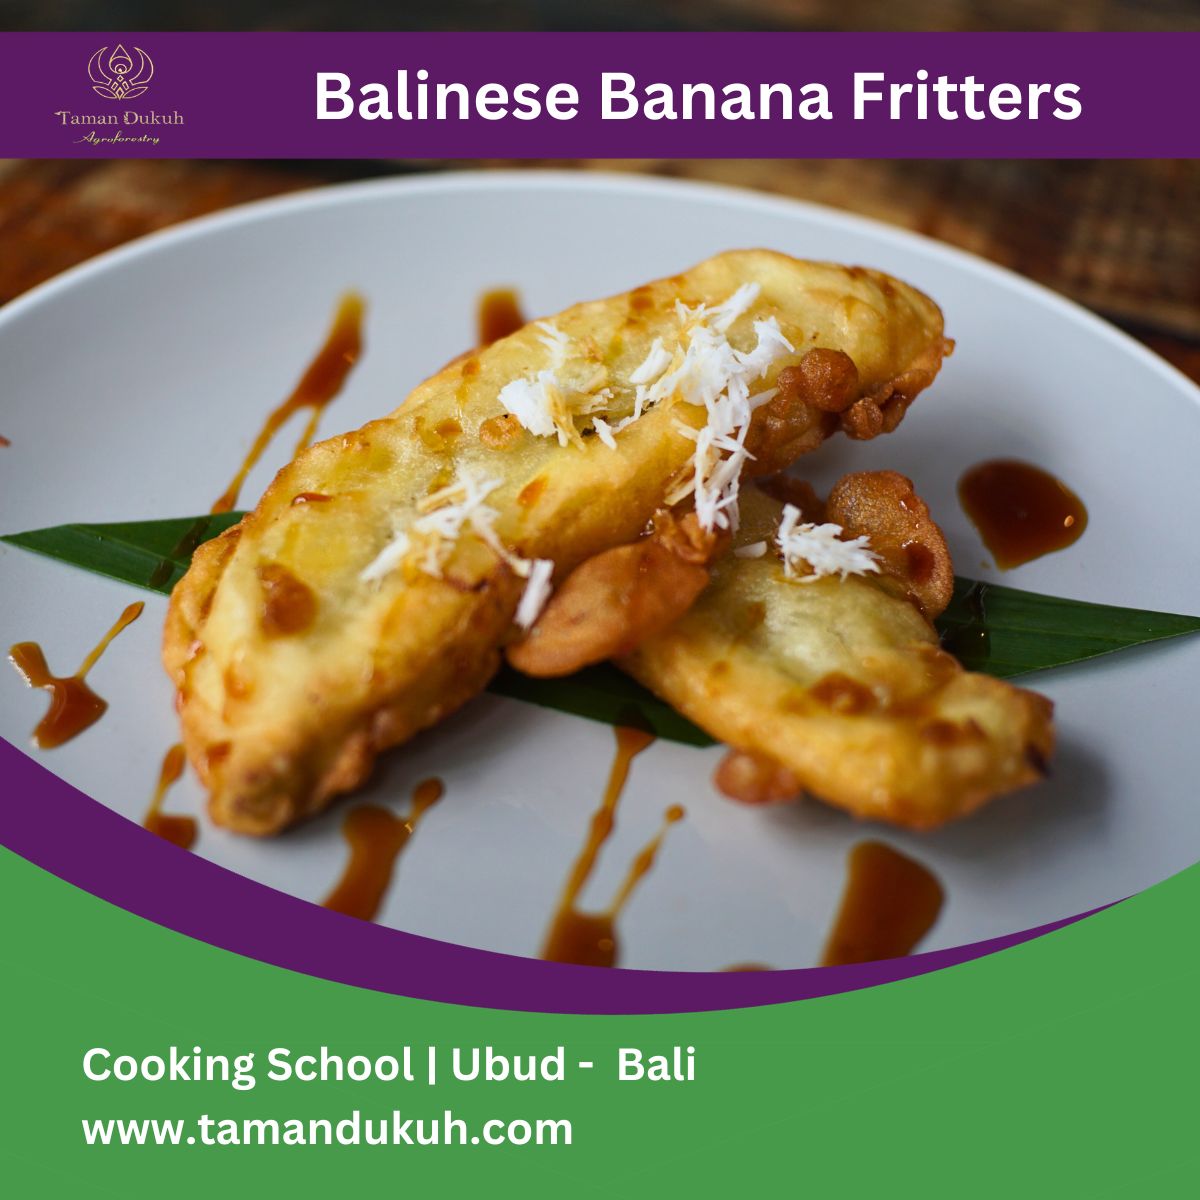 Taman Dukuh Balinese Banana Fritters